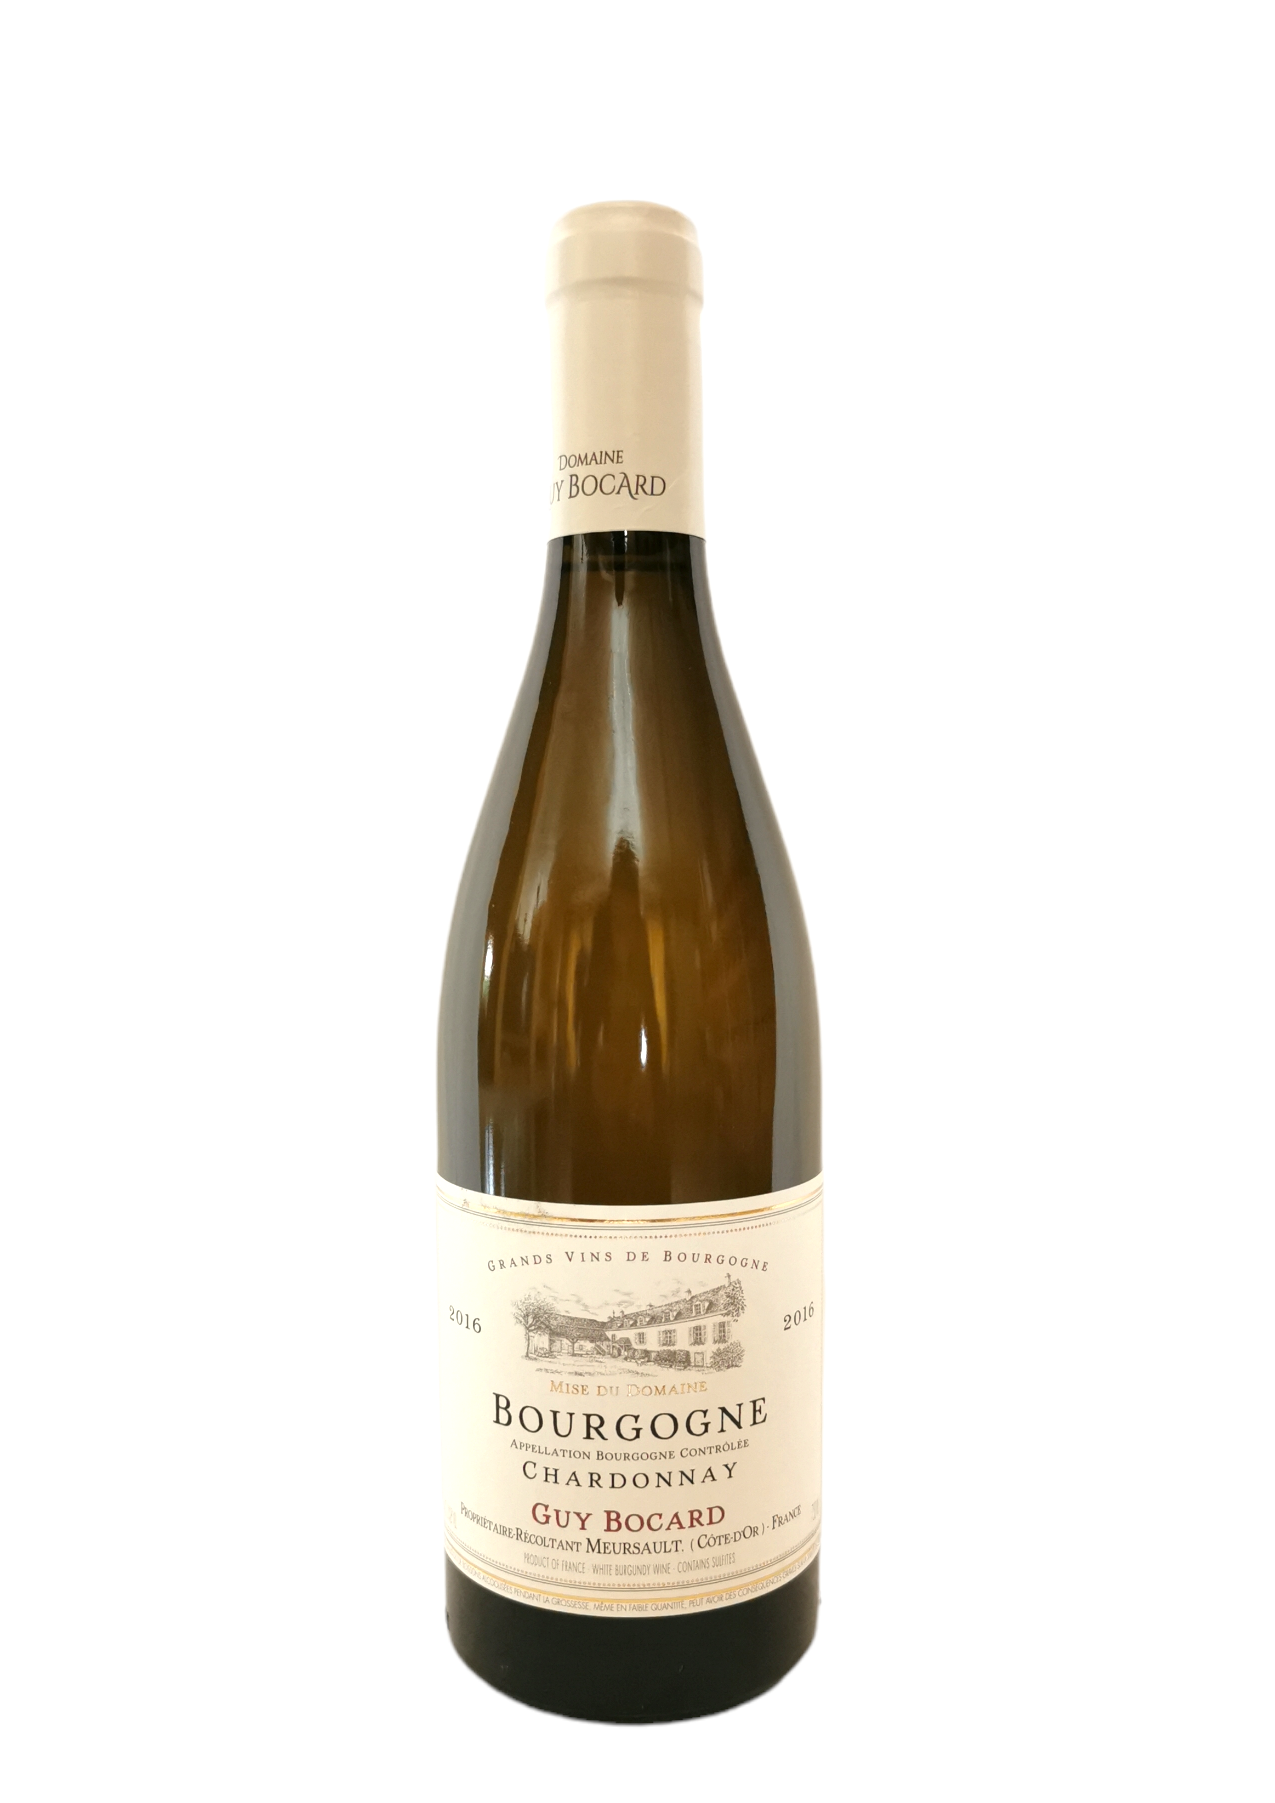 Guy Bocard Bourgogne Chardonnay 2016